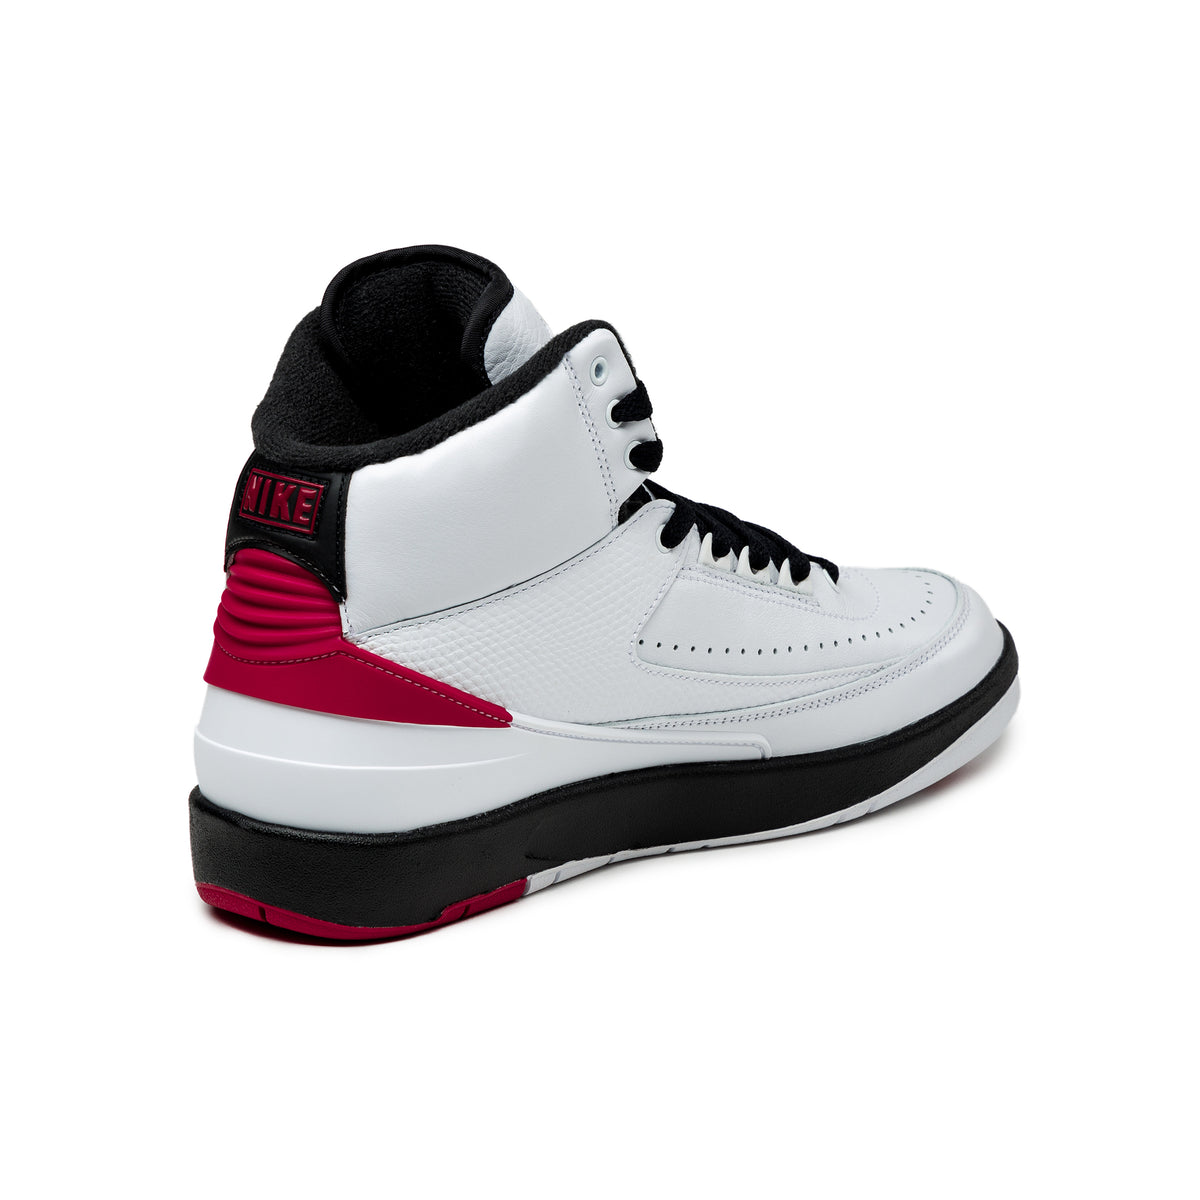 Nike Air Jordan 2 Retro *Chicago* » Buy online now!